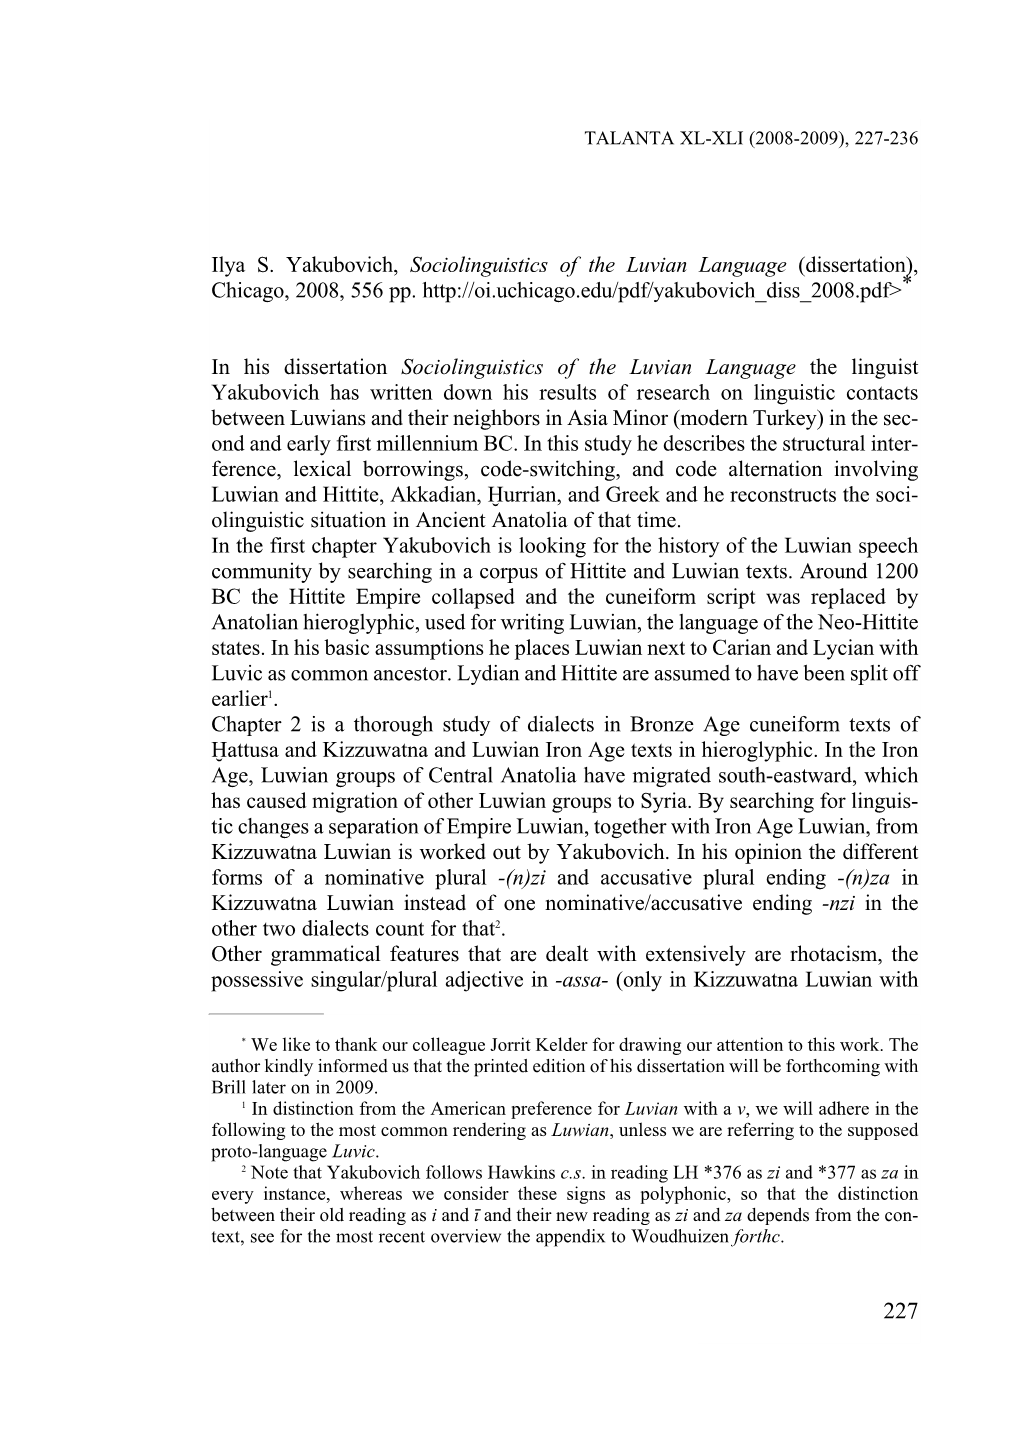 Ilya S. Yakubovich, Sociolinguistics of the Luvian Language (Dissertation), Chicago, 2008, 556 Pp